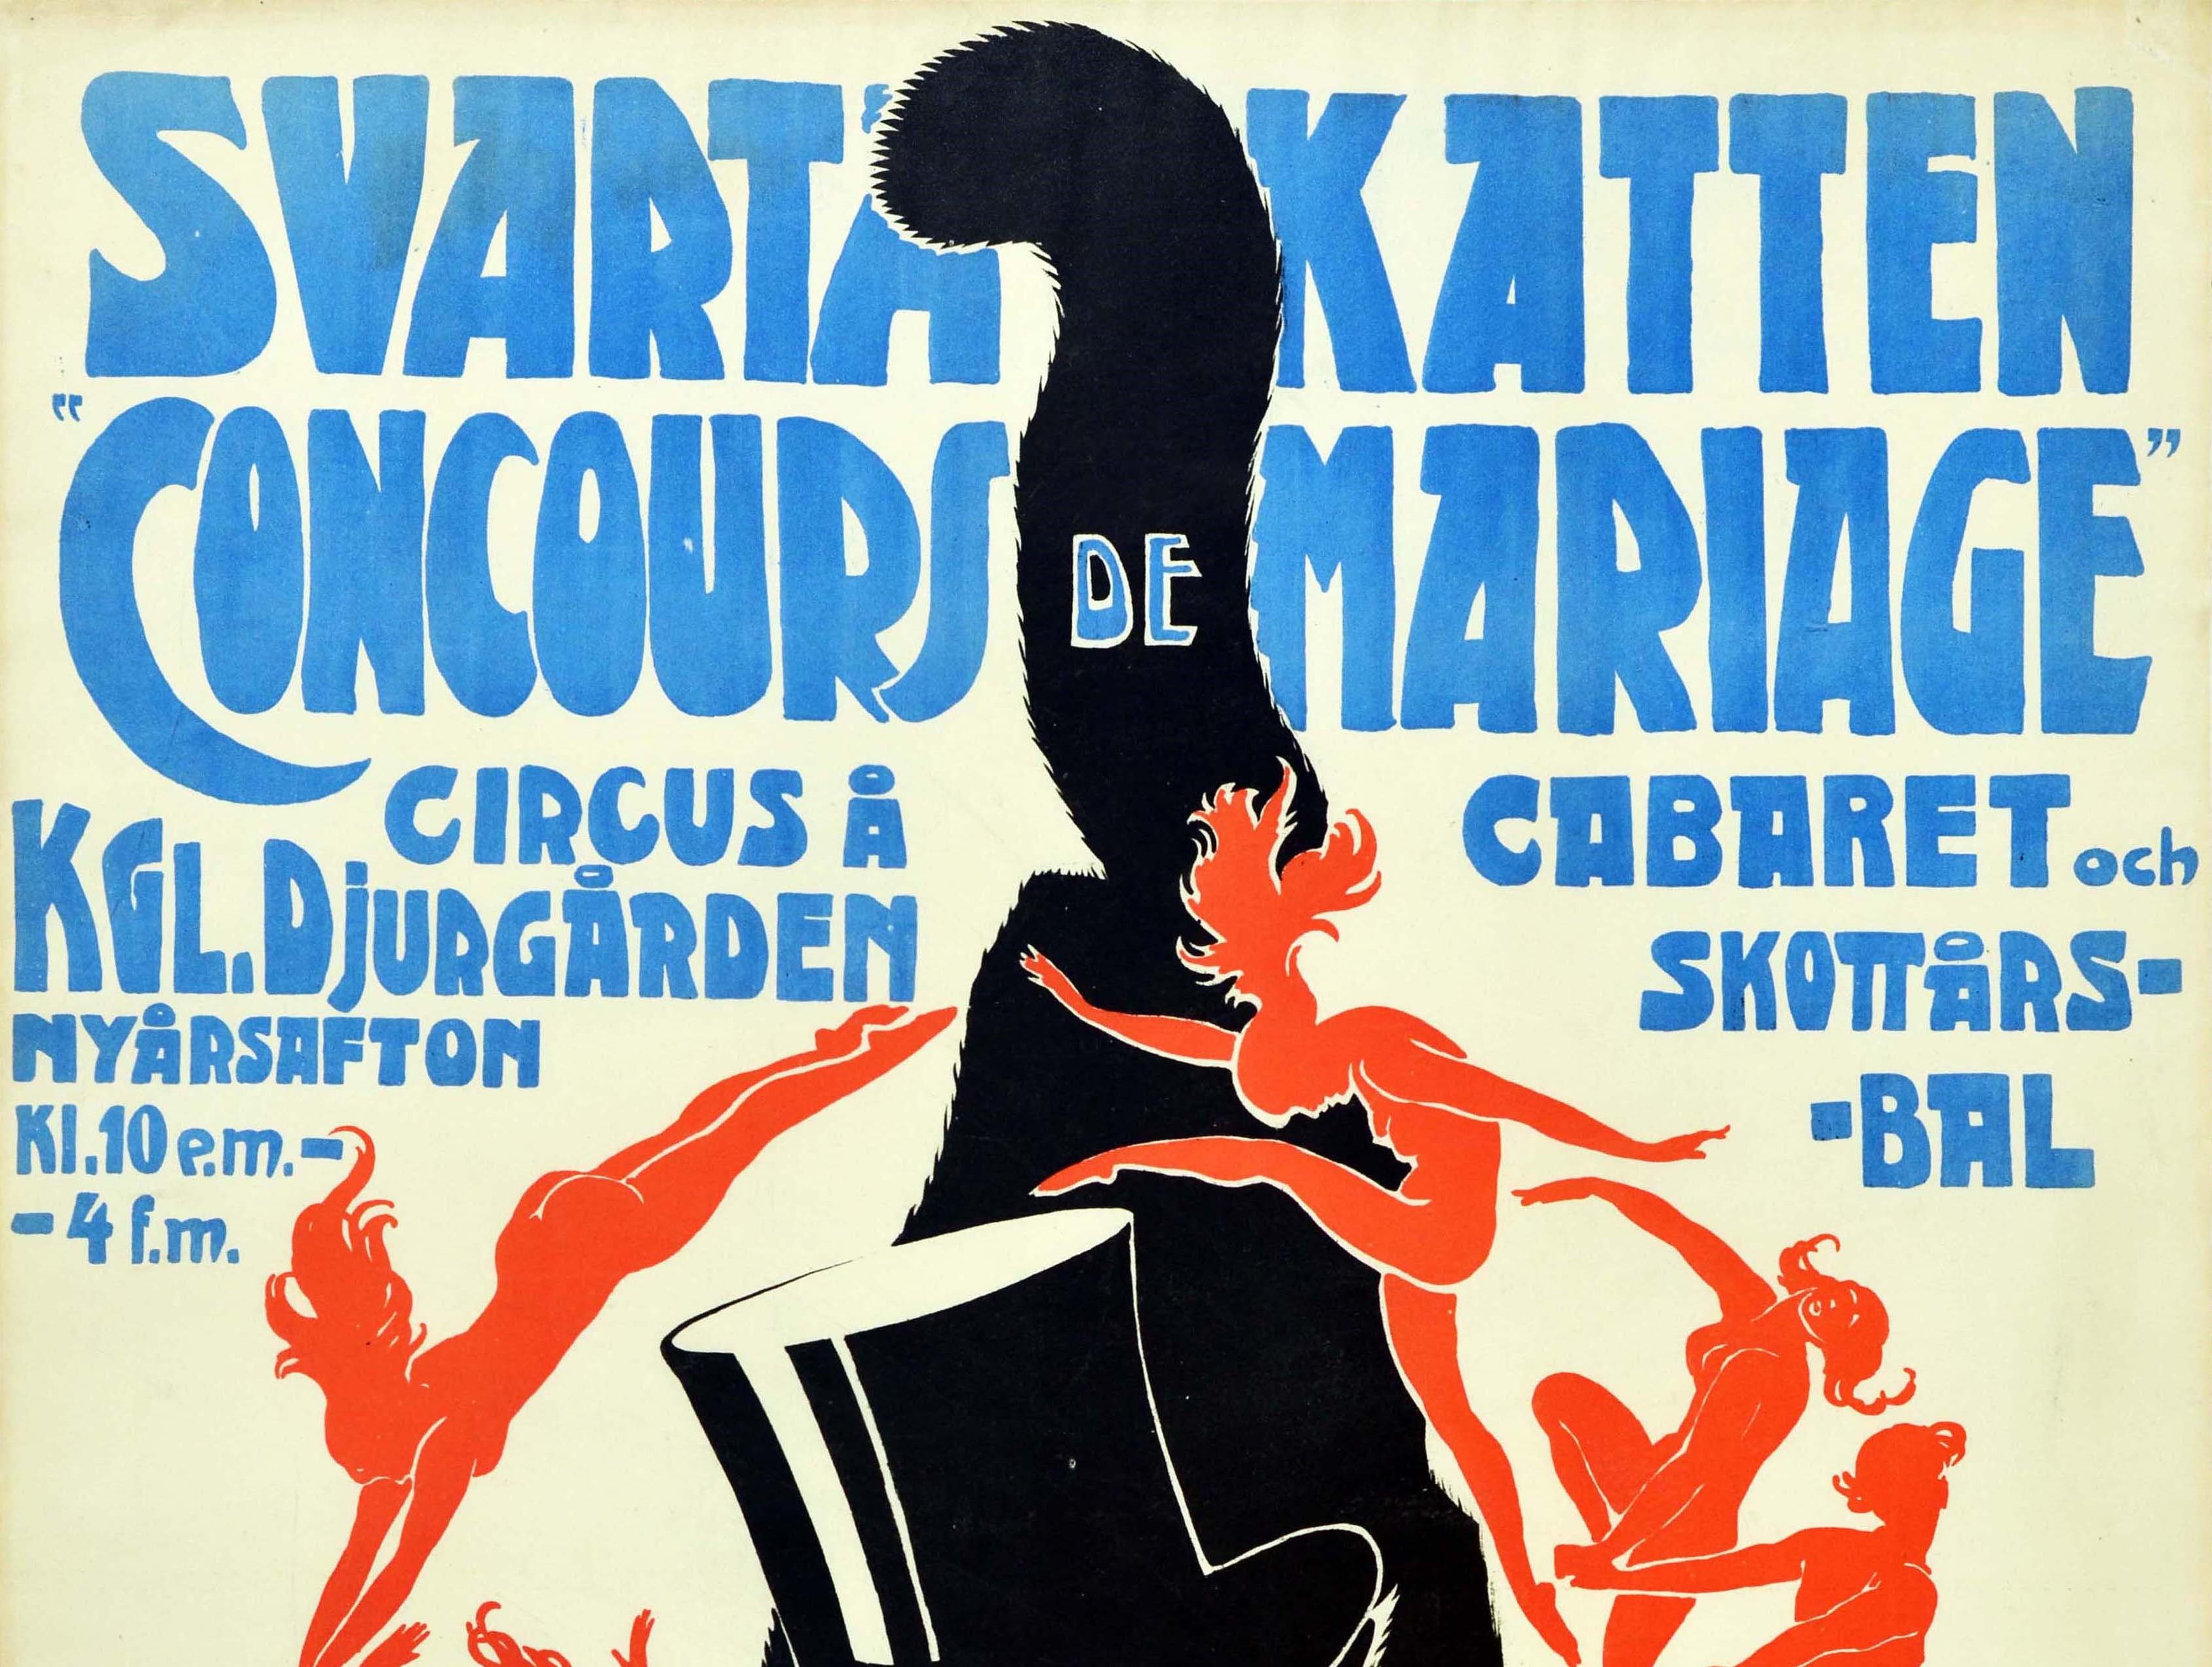 Original Vintage Poster Svarta Katten Black Cat Art New Year Cabaret Circus Ball - Print by Gunnar Widholm